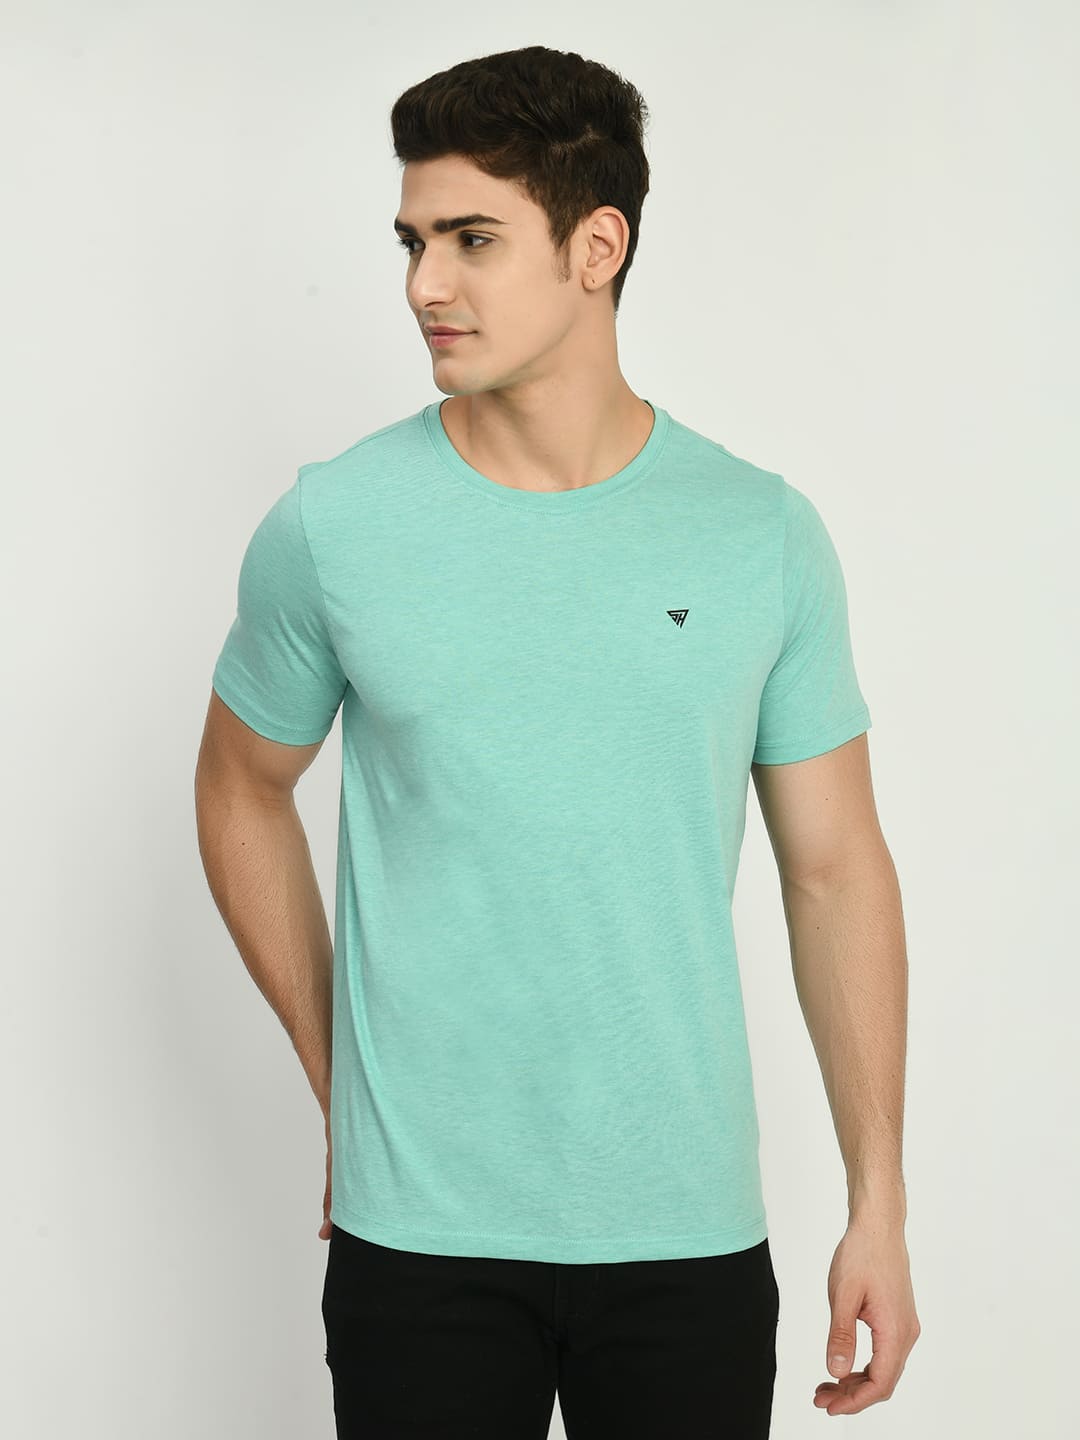 Basic Sea Green Knitted fabric T-Shirt